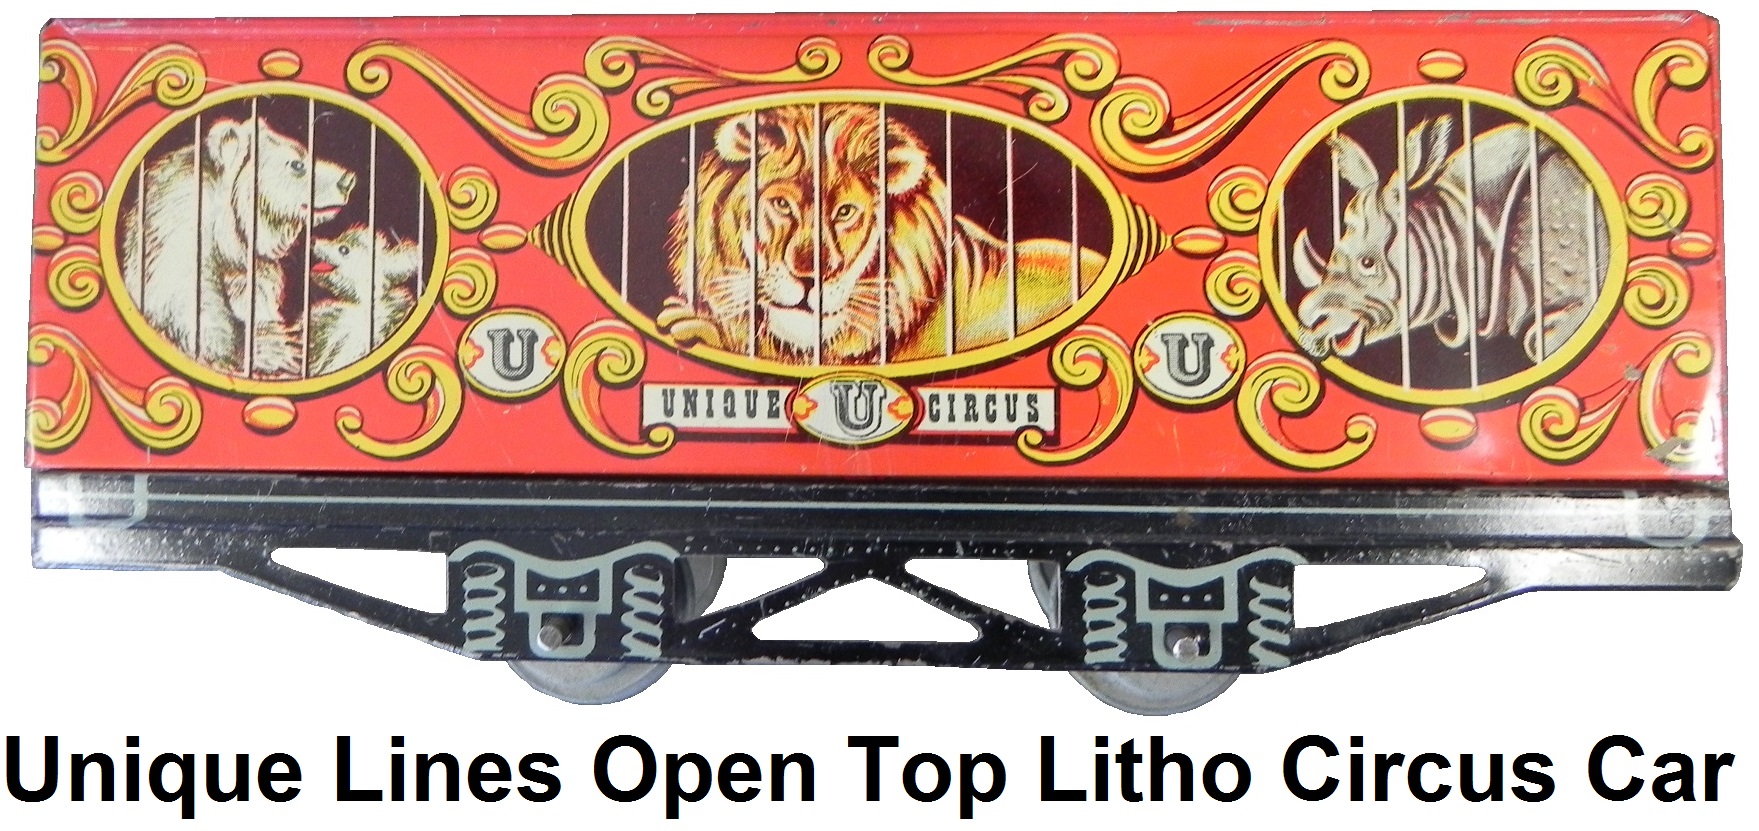 Unique Lines tinplate lithographed 'O' gauge circus car - Unique Lion version without roof